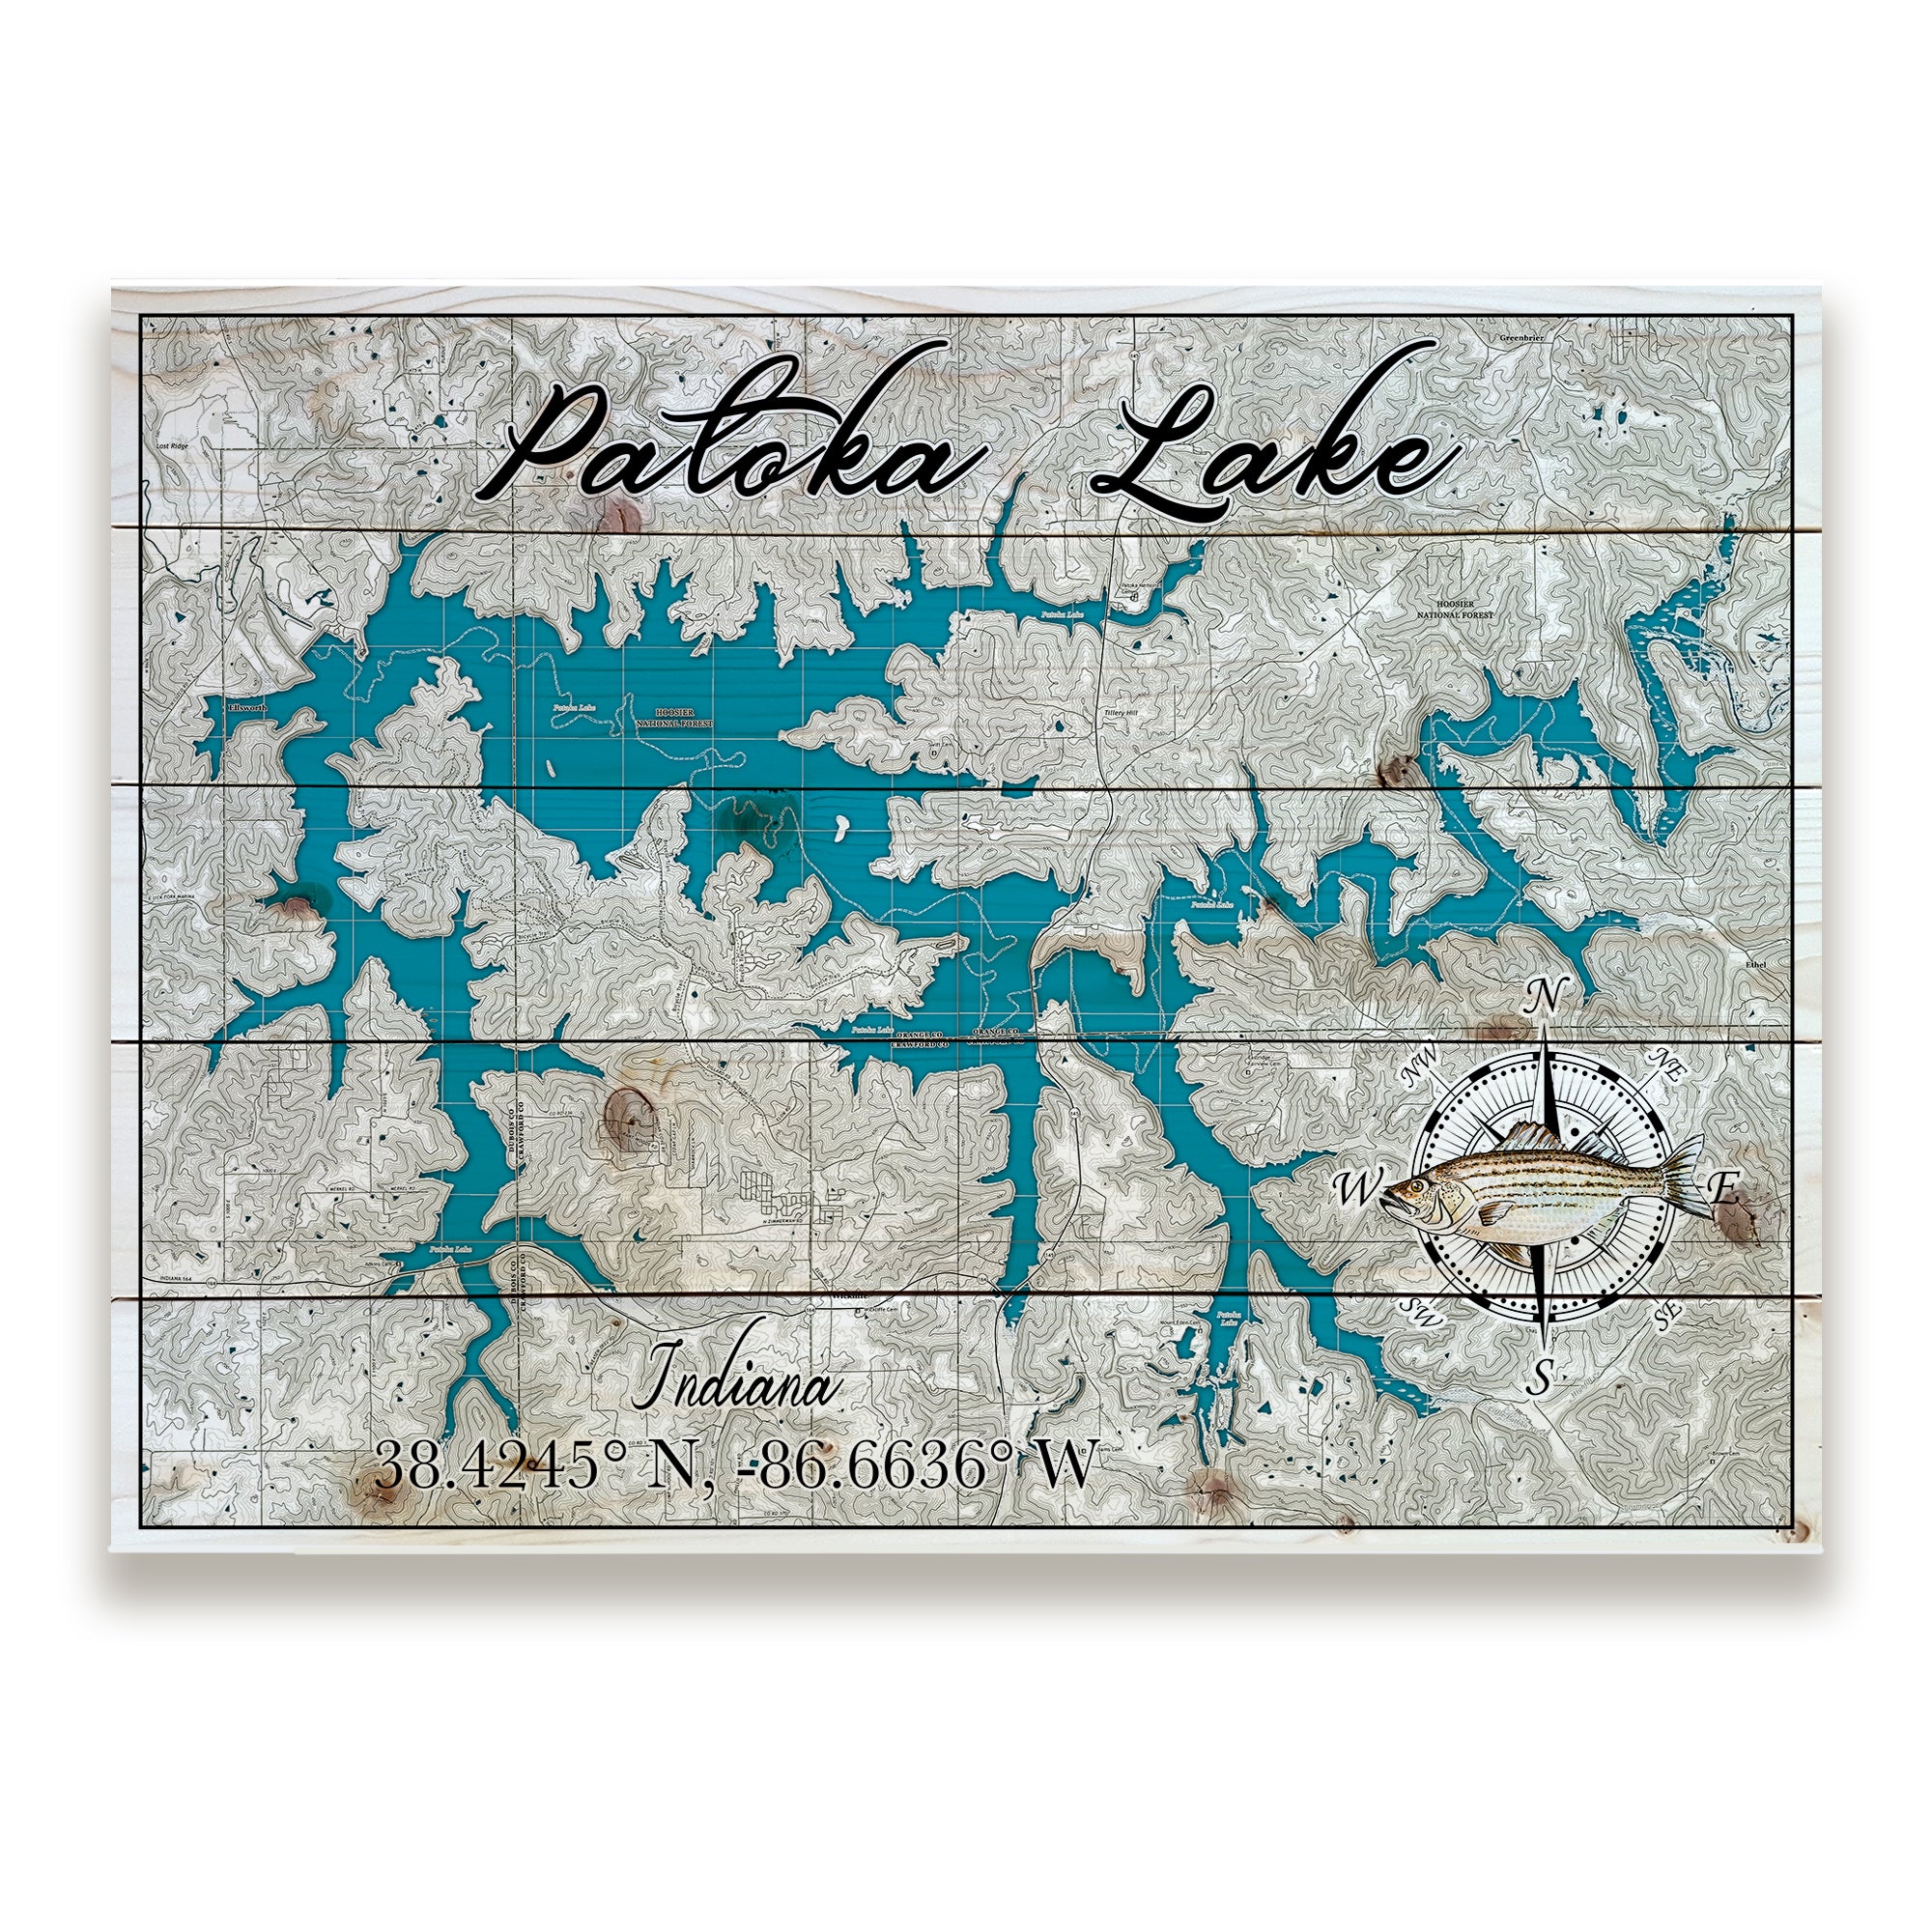 Patoka Lake, IN Pallet Map